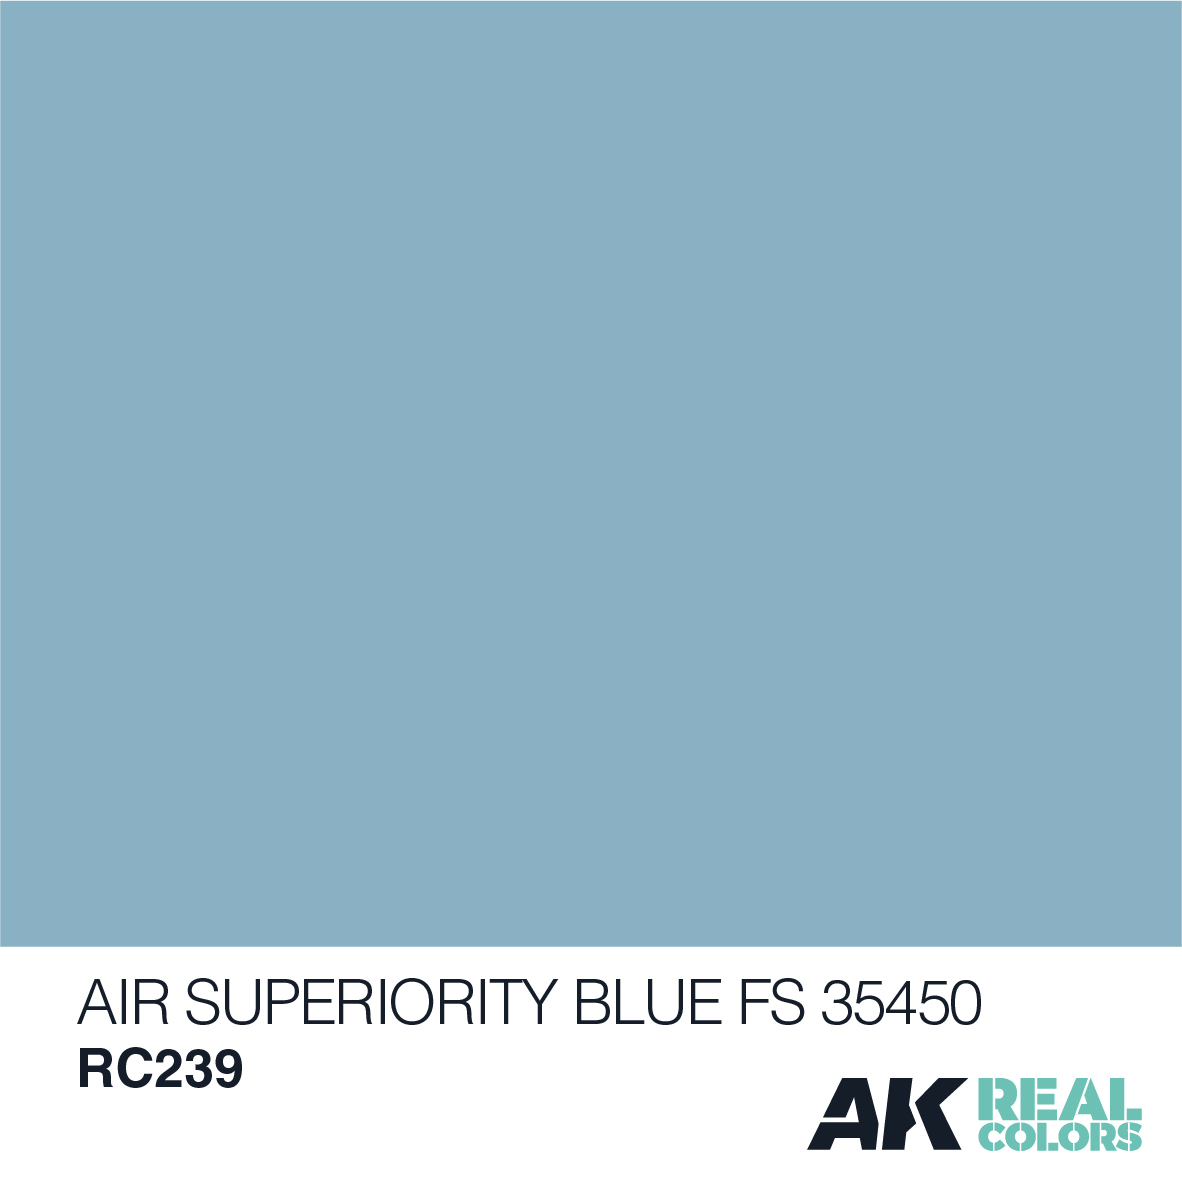 Air Superiority Blue FS 35450